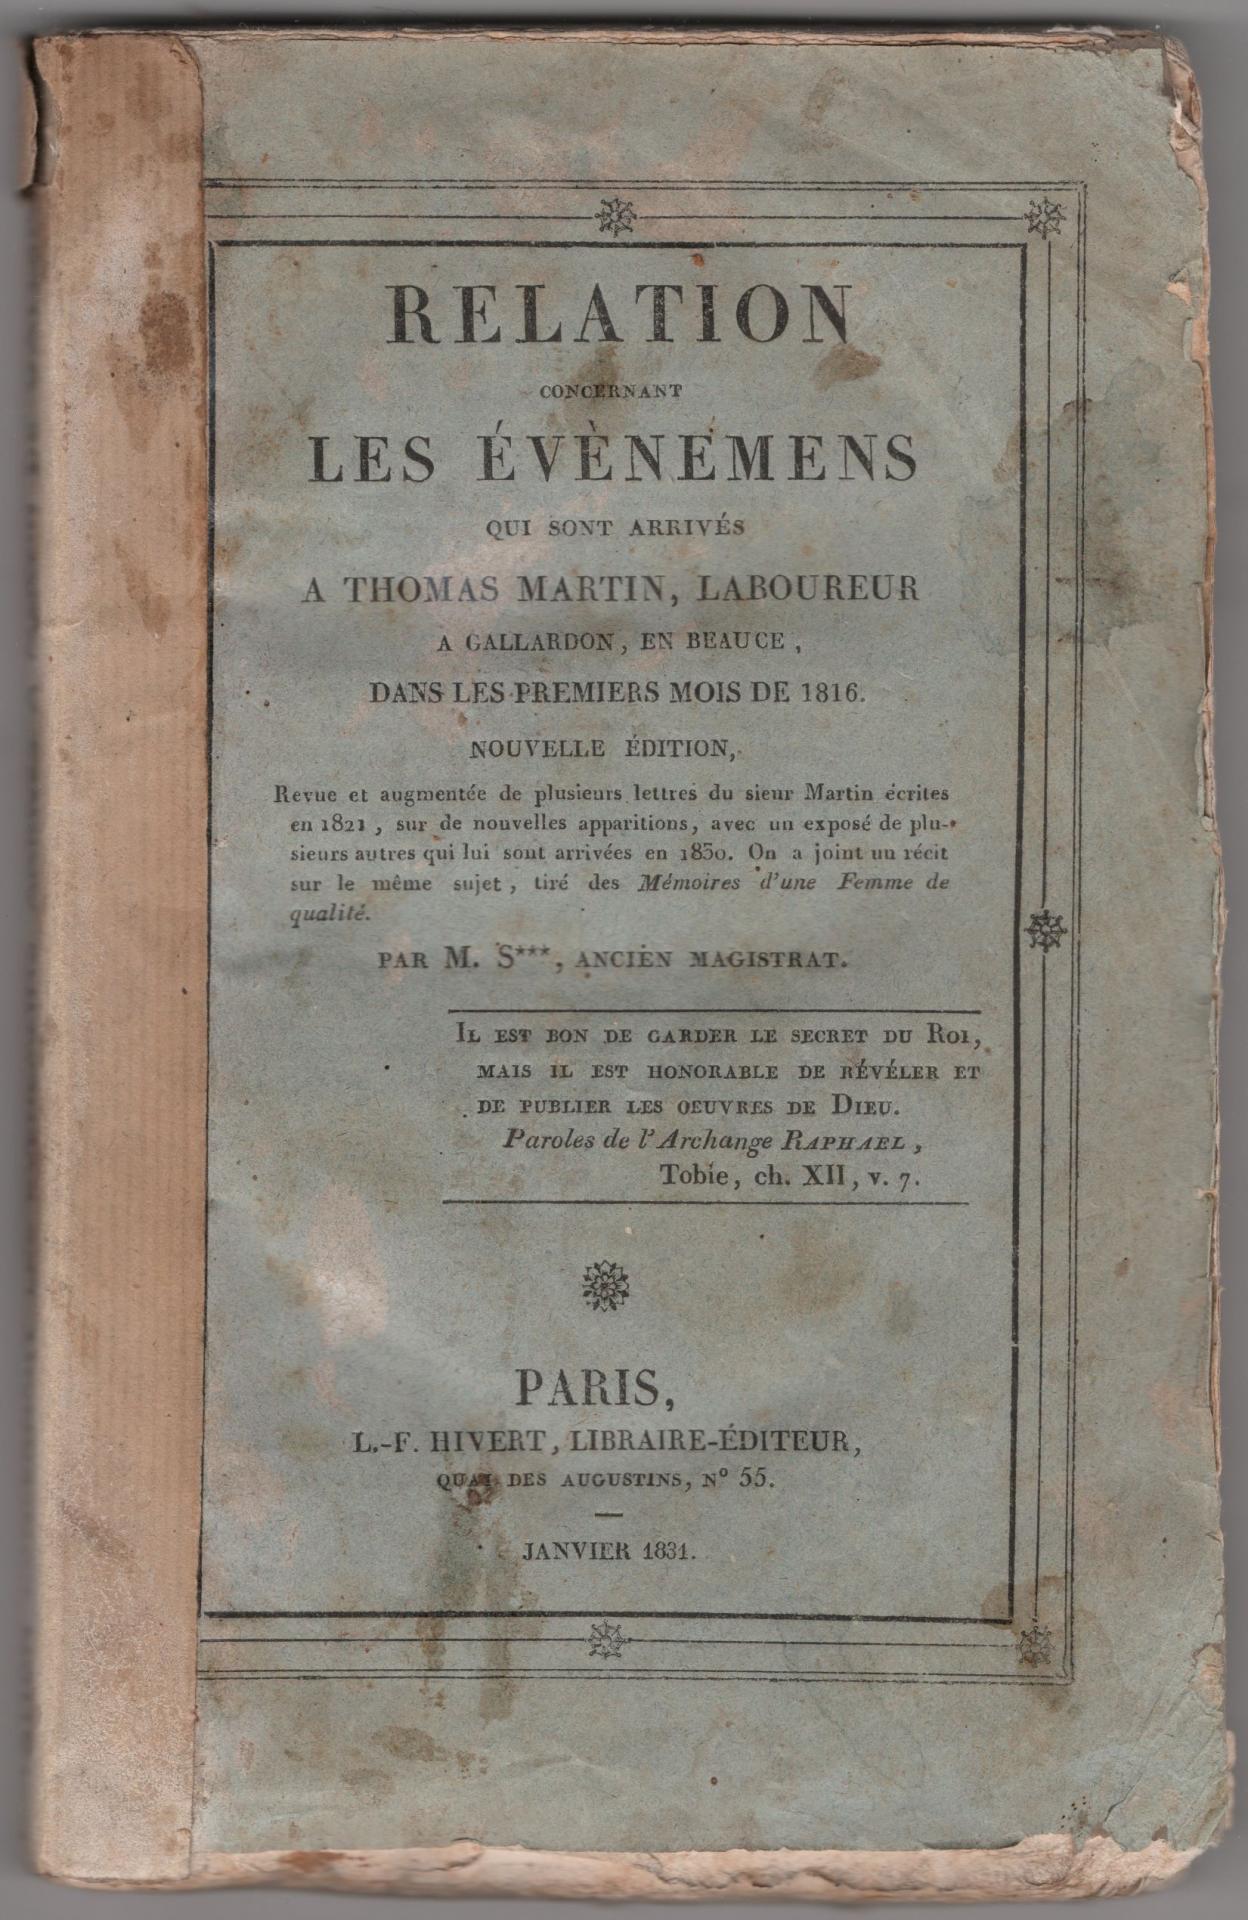 Relation concernant les evenements qui sont arrives a thomas martin 1832